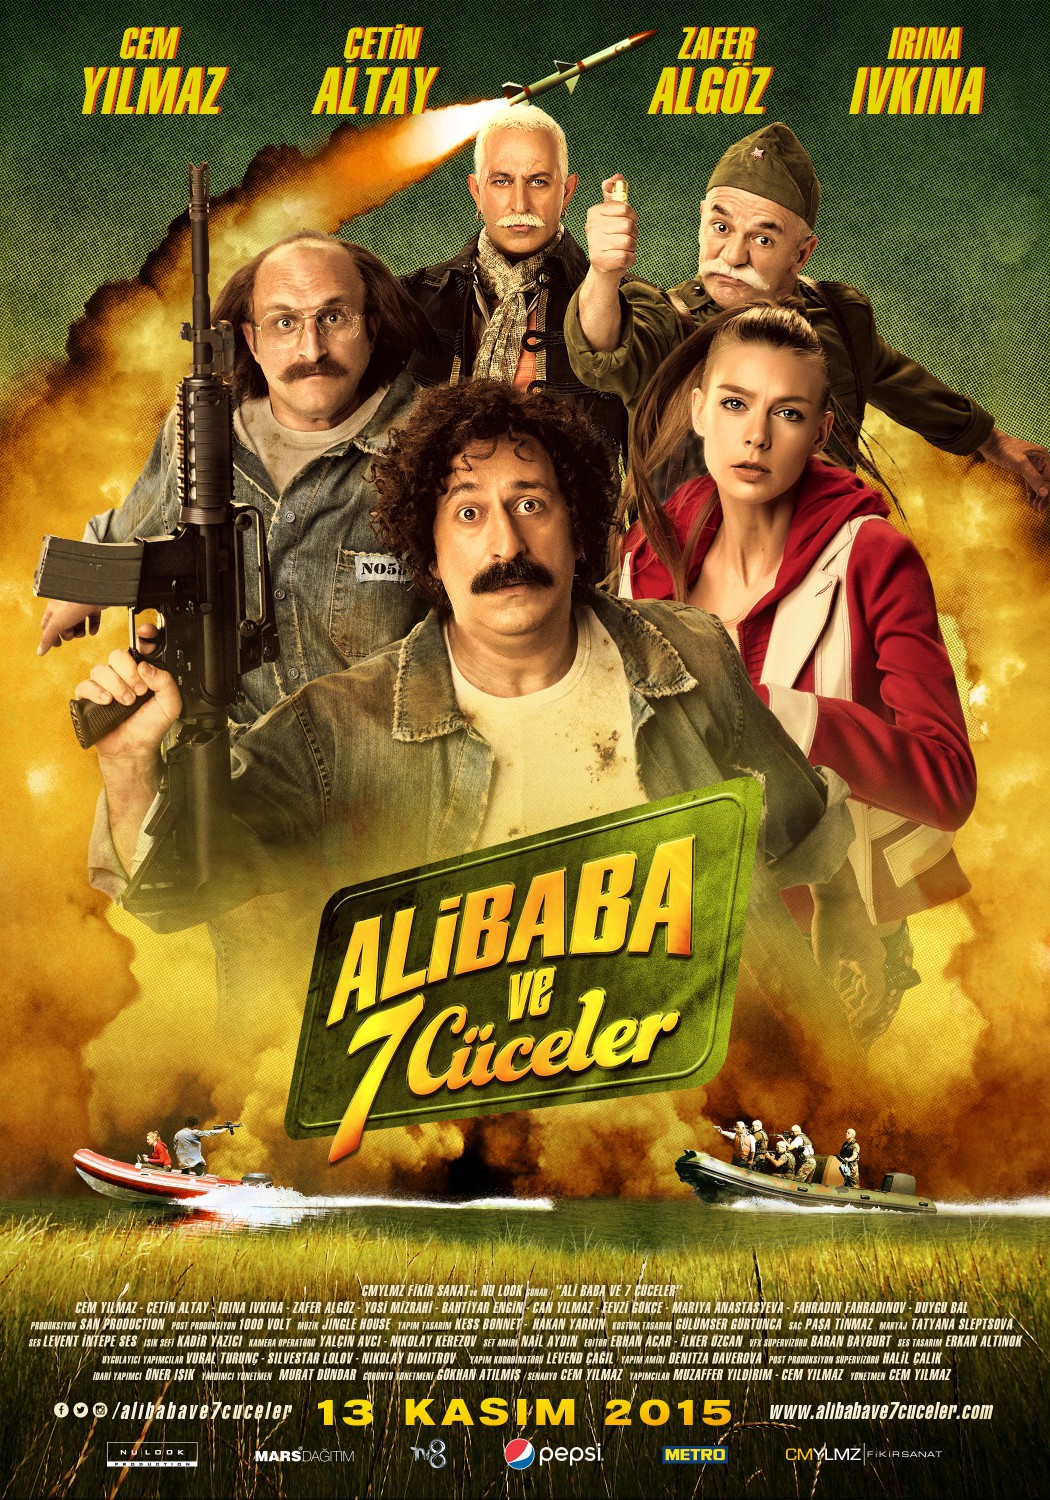 Extra Large Movie Poster Image for Ali Baba ve 7 Cüceler (#3 of 4)